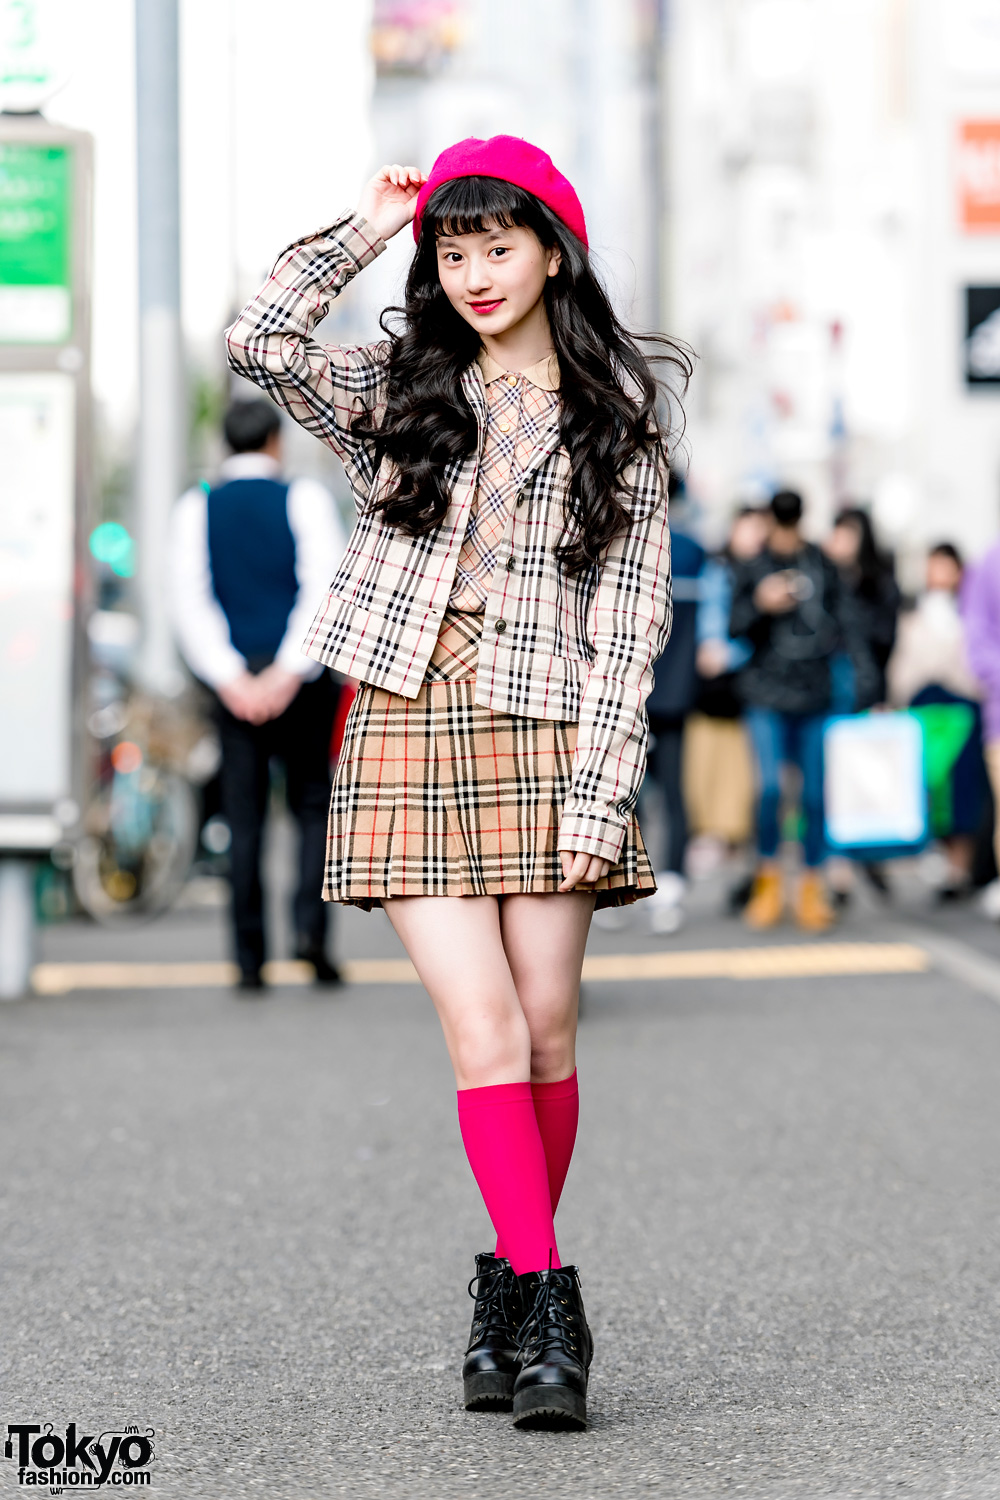 Japanese Model A-Pon in Harajuku w/ Burberry Plaid Fashion, Pink Beret & WEGO Boots